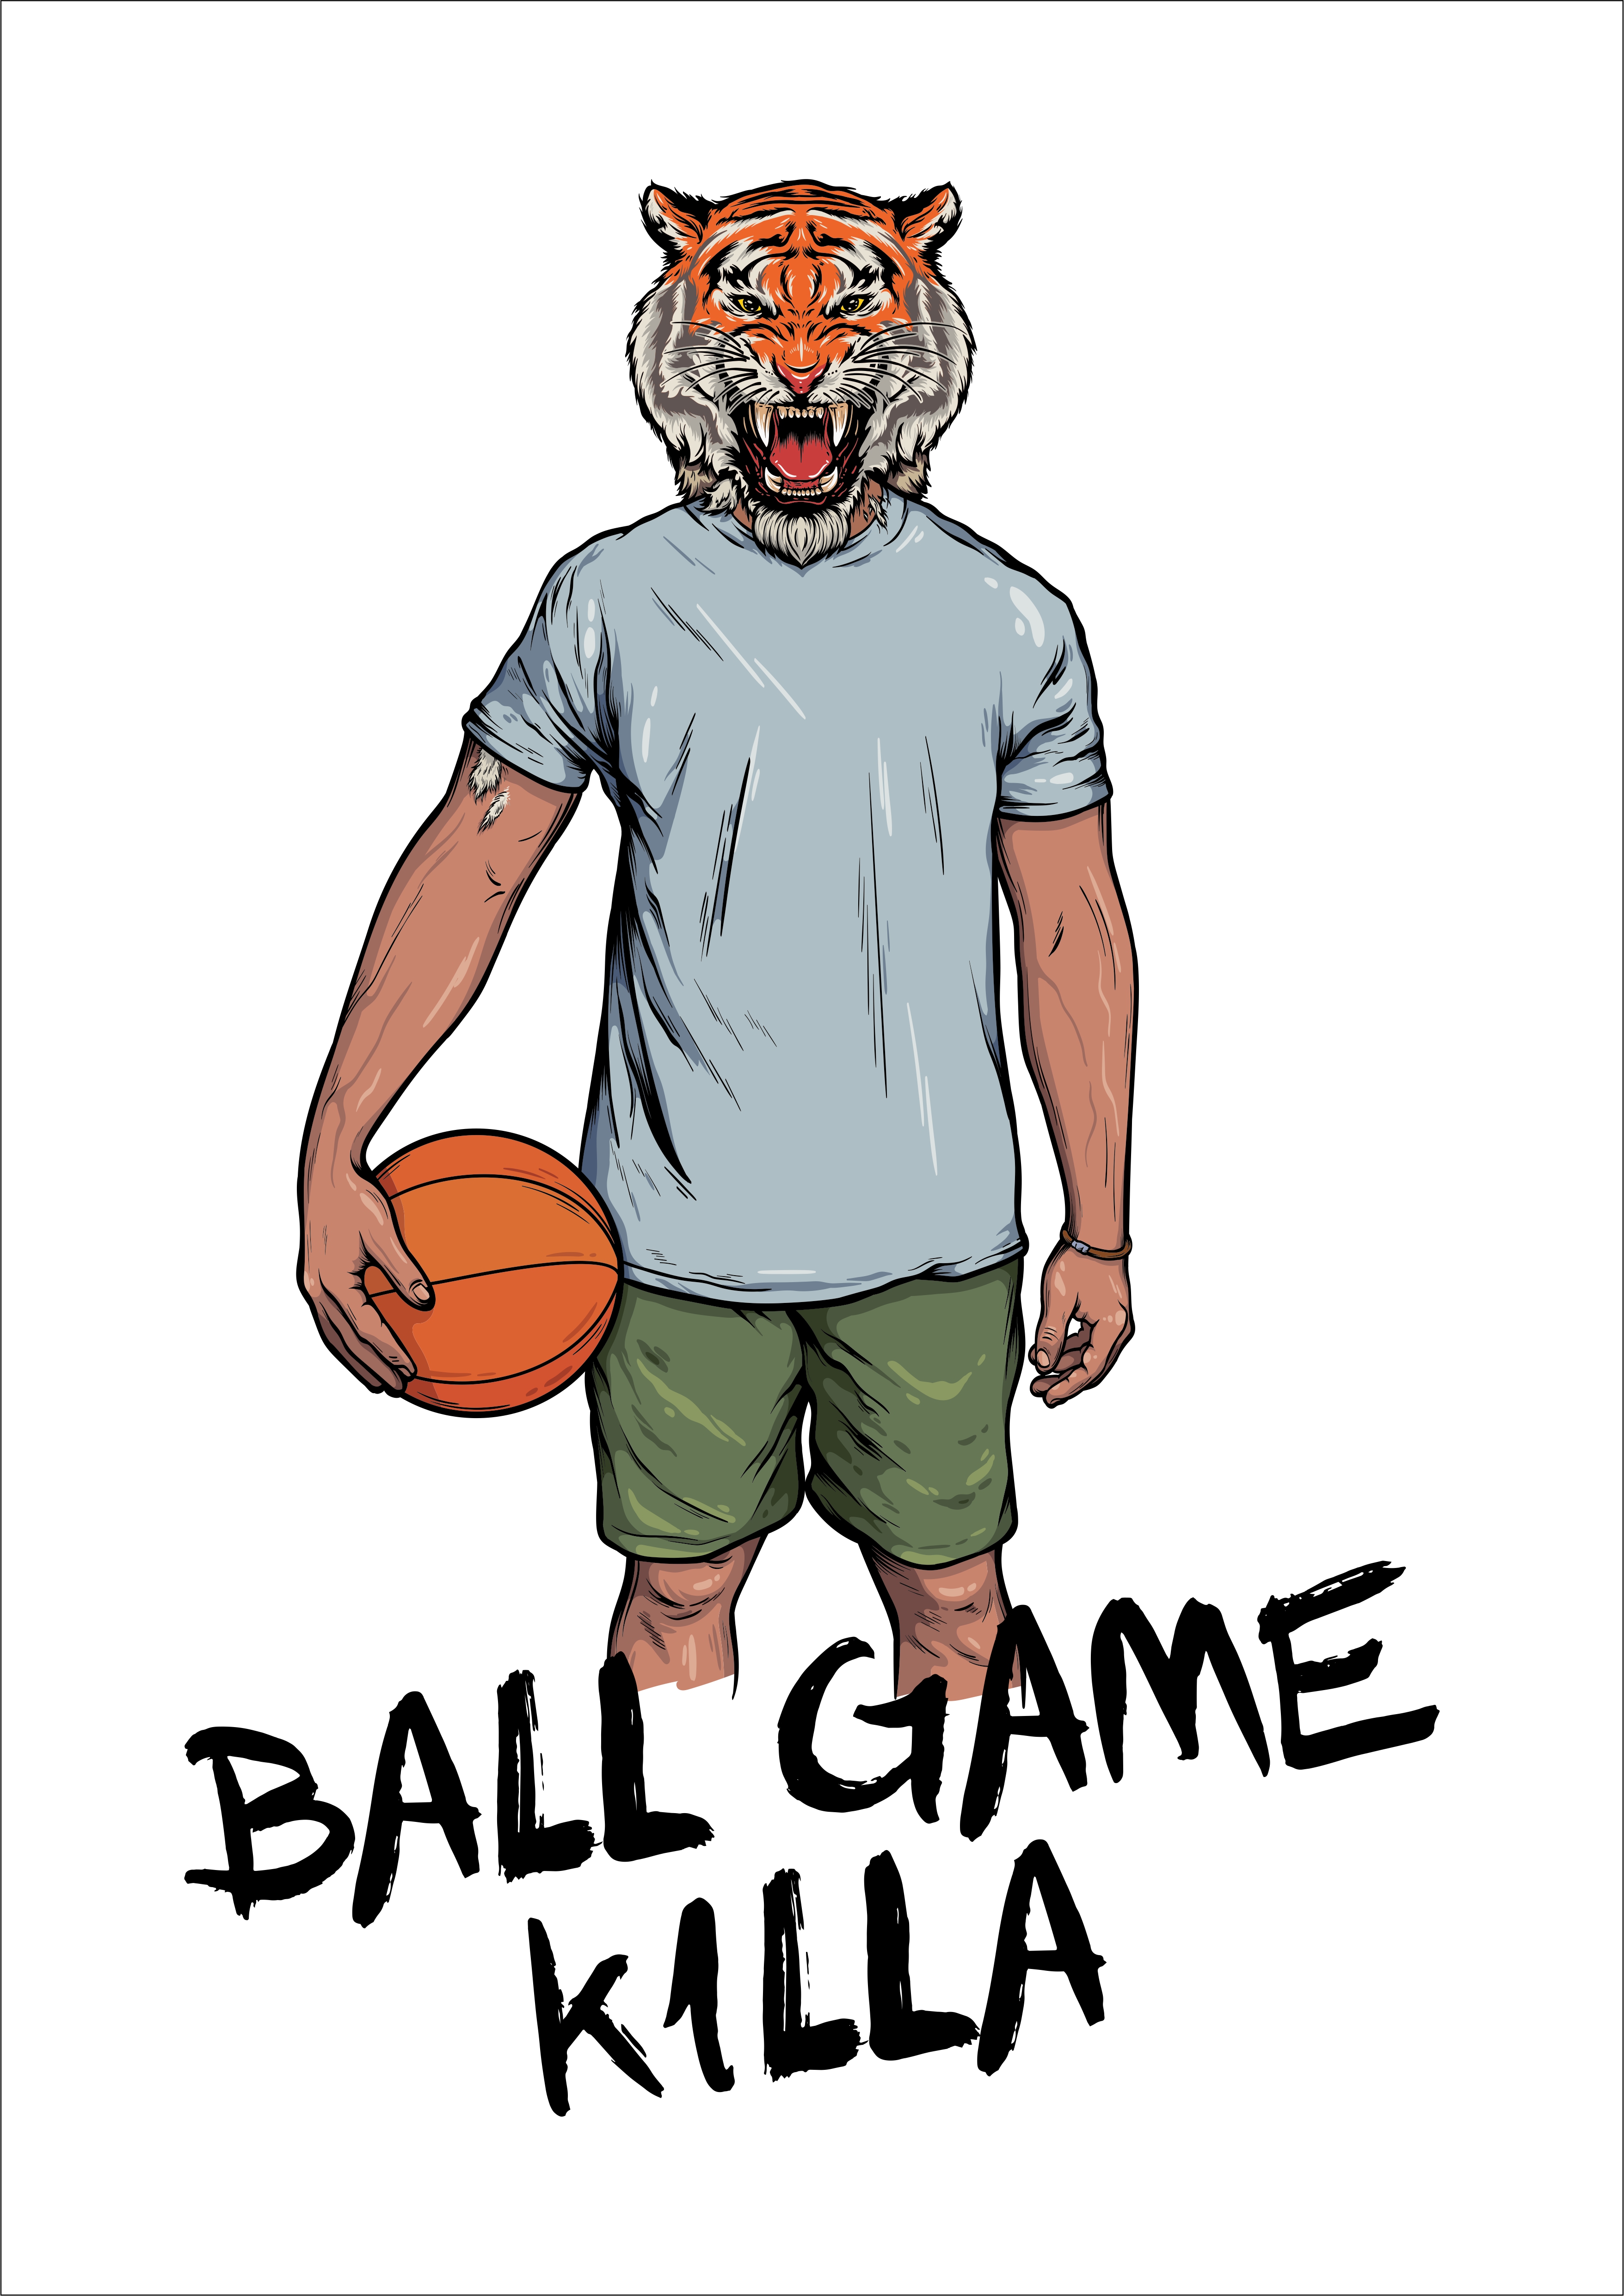 Ball game killa 1